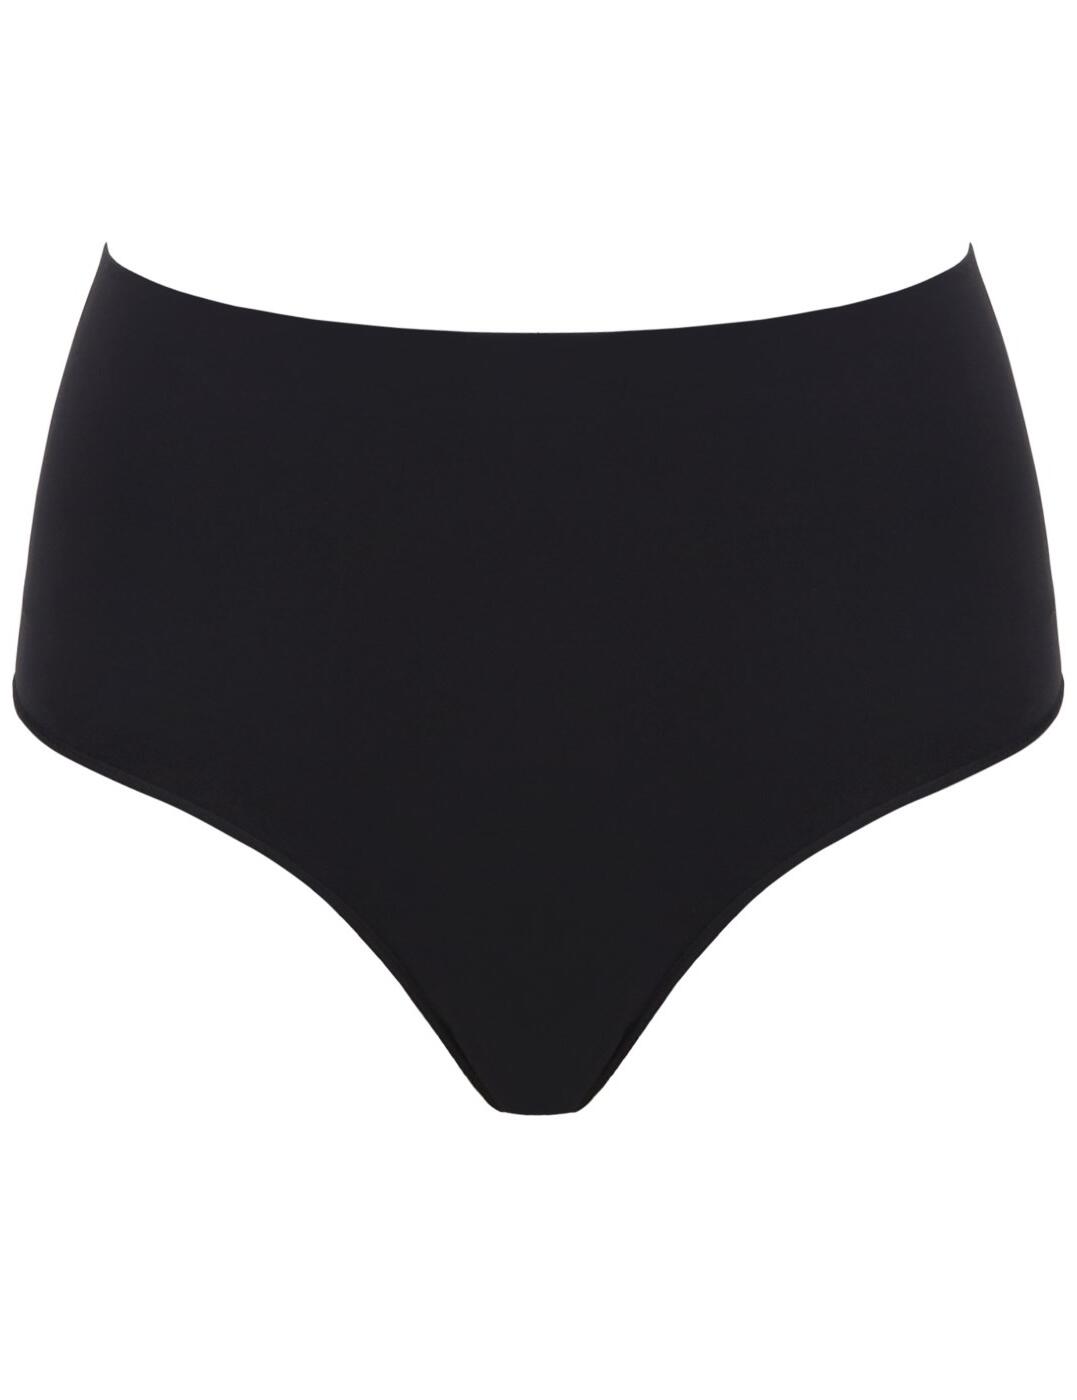 Spanx Everyday Shaping Panties Brief - Belle Lingerie